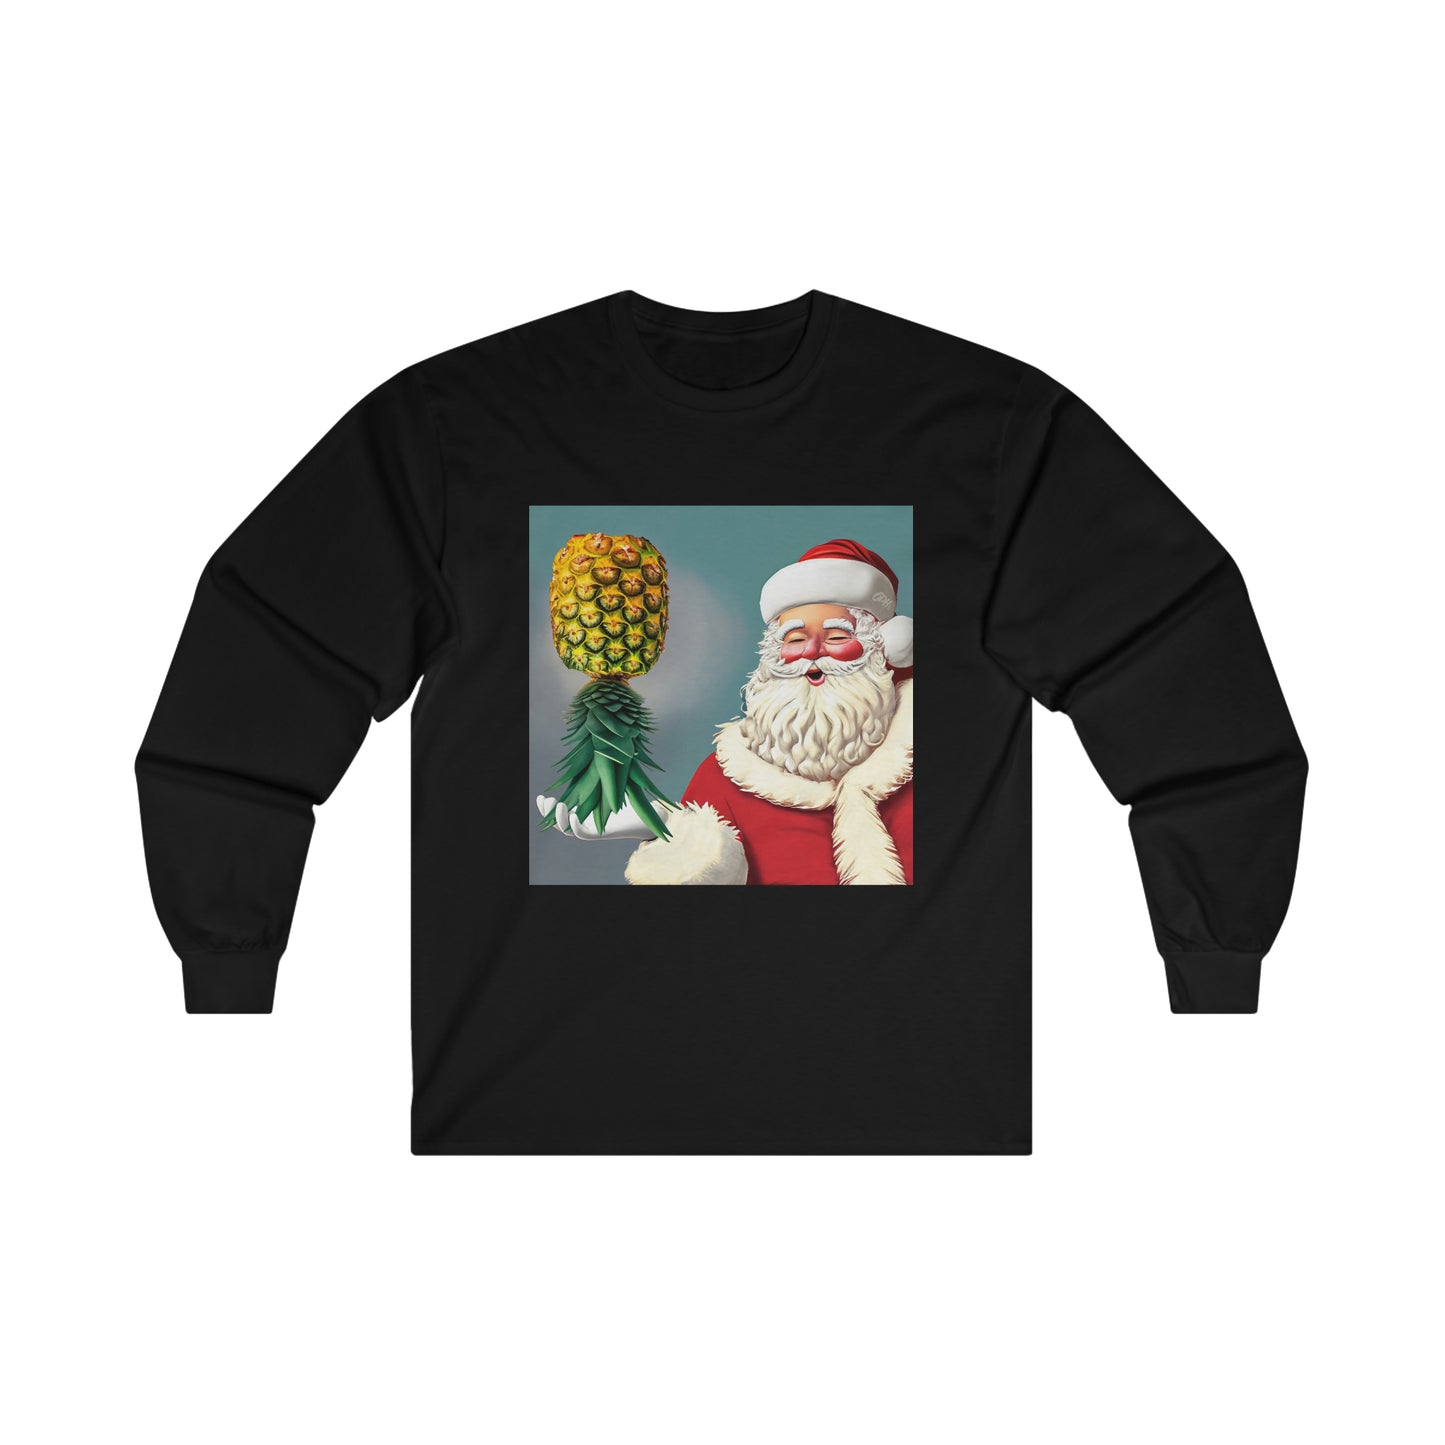 Upside Down Pineapple Santa Claus Long Sleeve Shirt, Christmas Sweater, Upside Down Pineapple T-shirt, Swingers Pullover Clothing